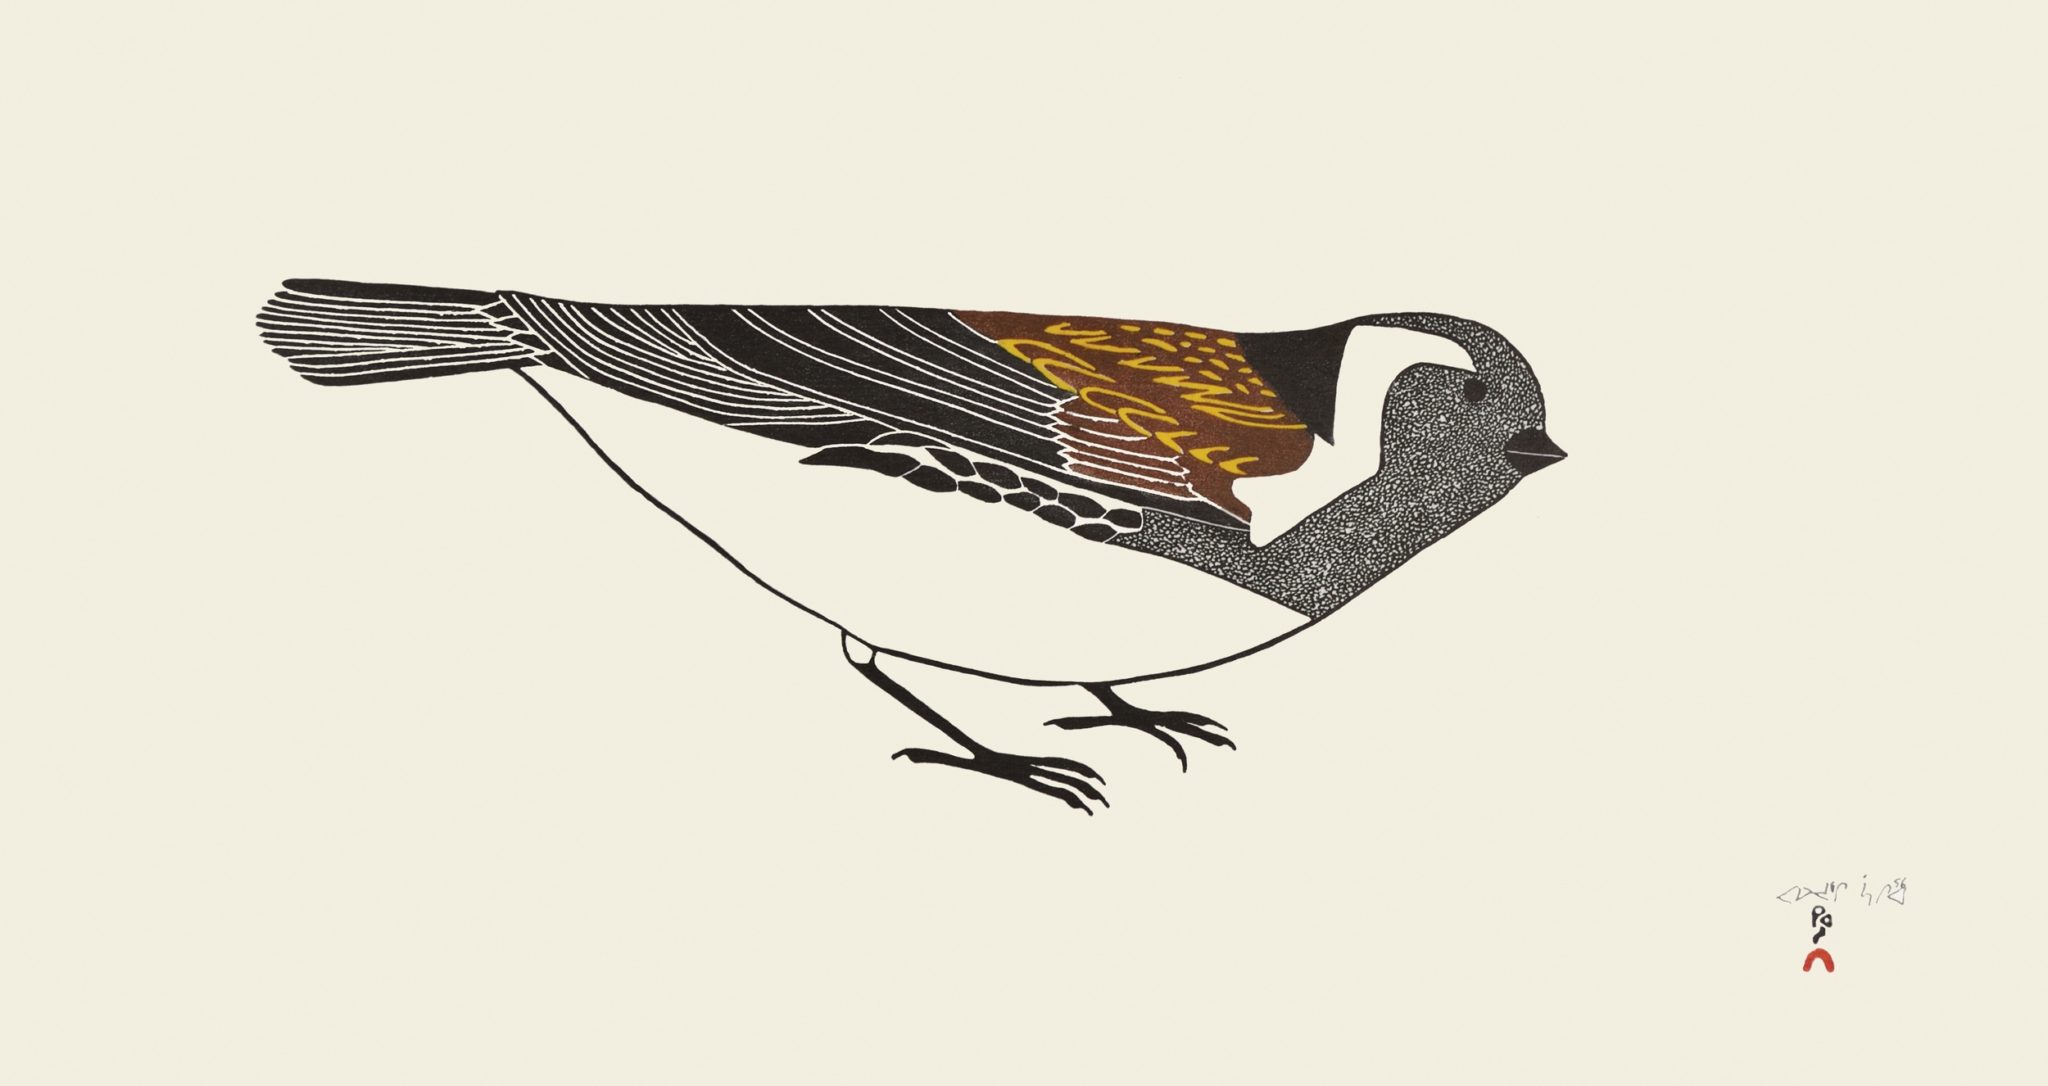 Pauojoungie Saggiai Timmiaralaaq Little Bird cape dorset print collection 2016 360